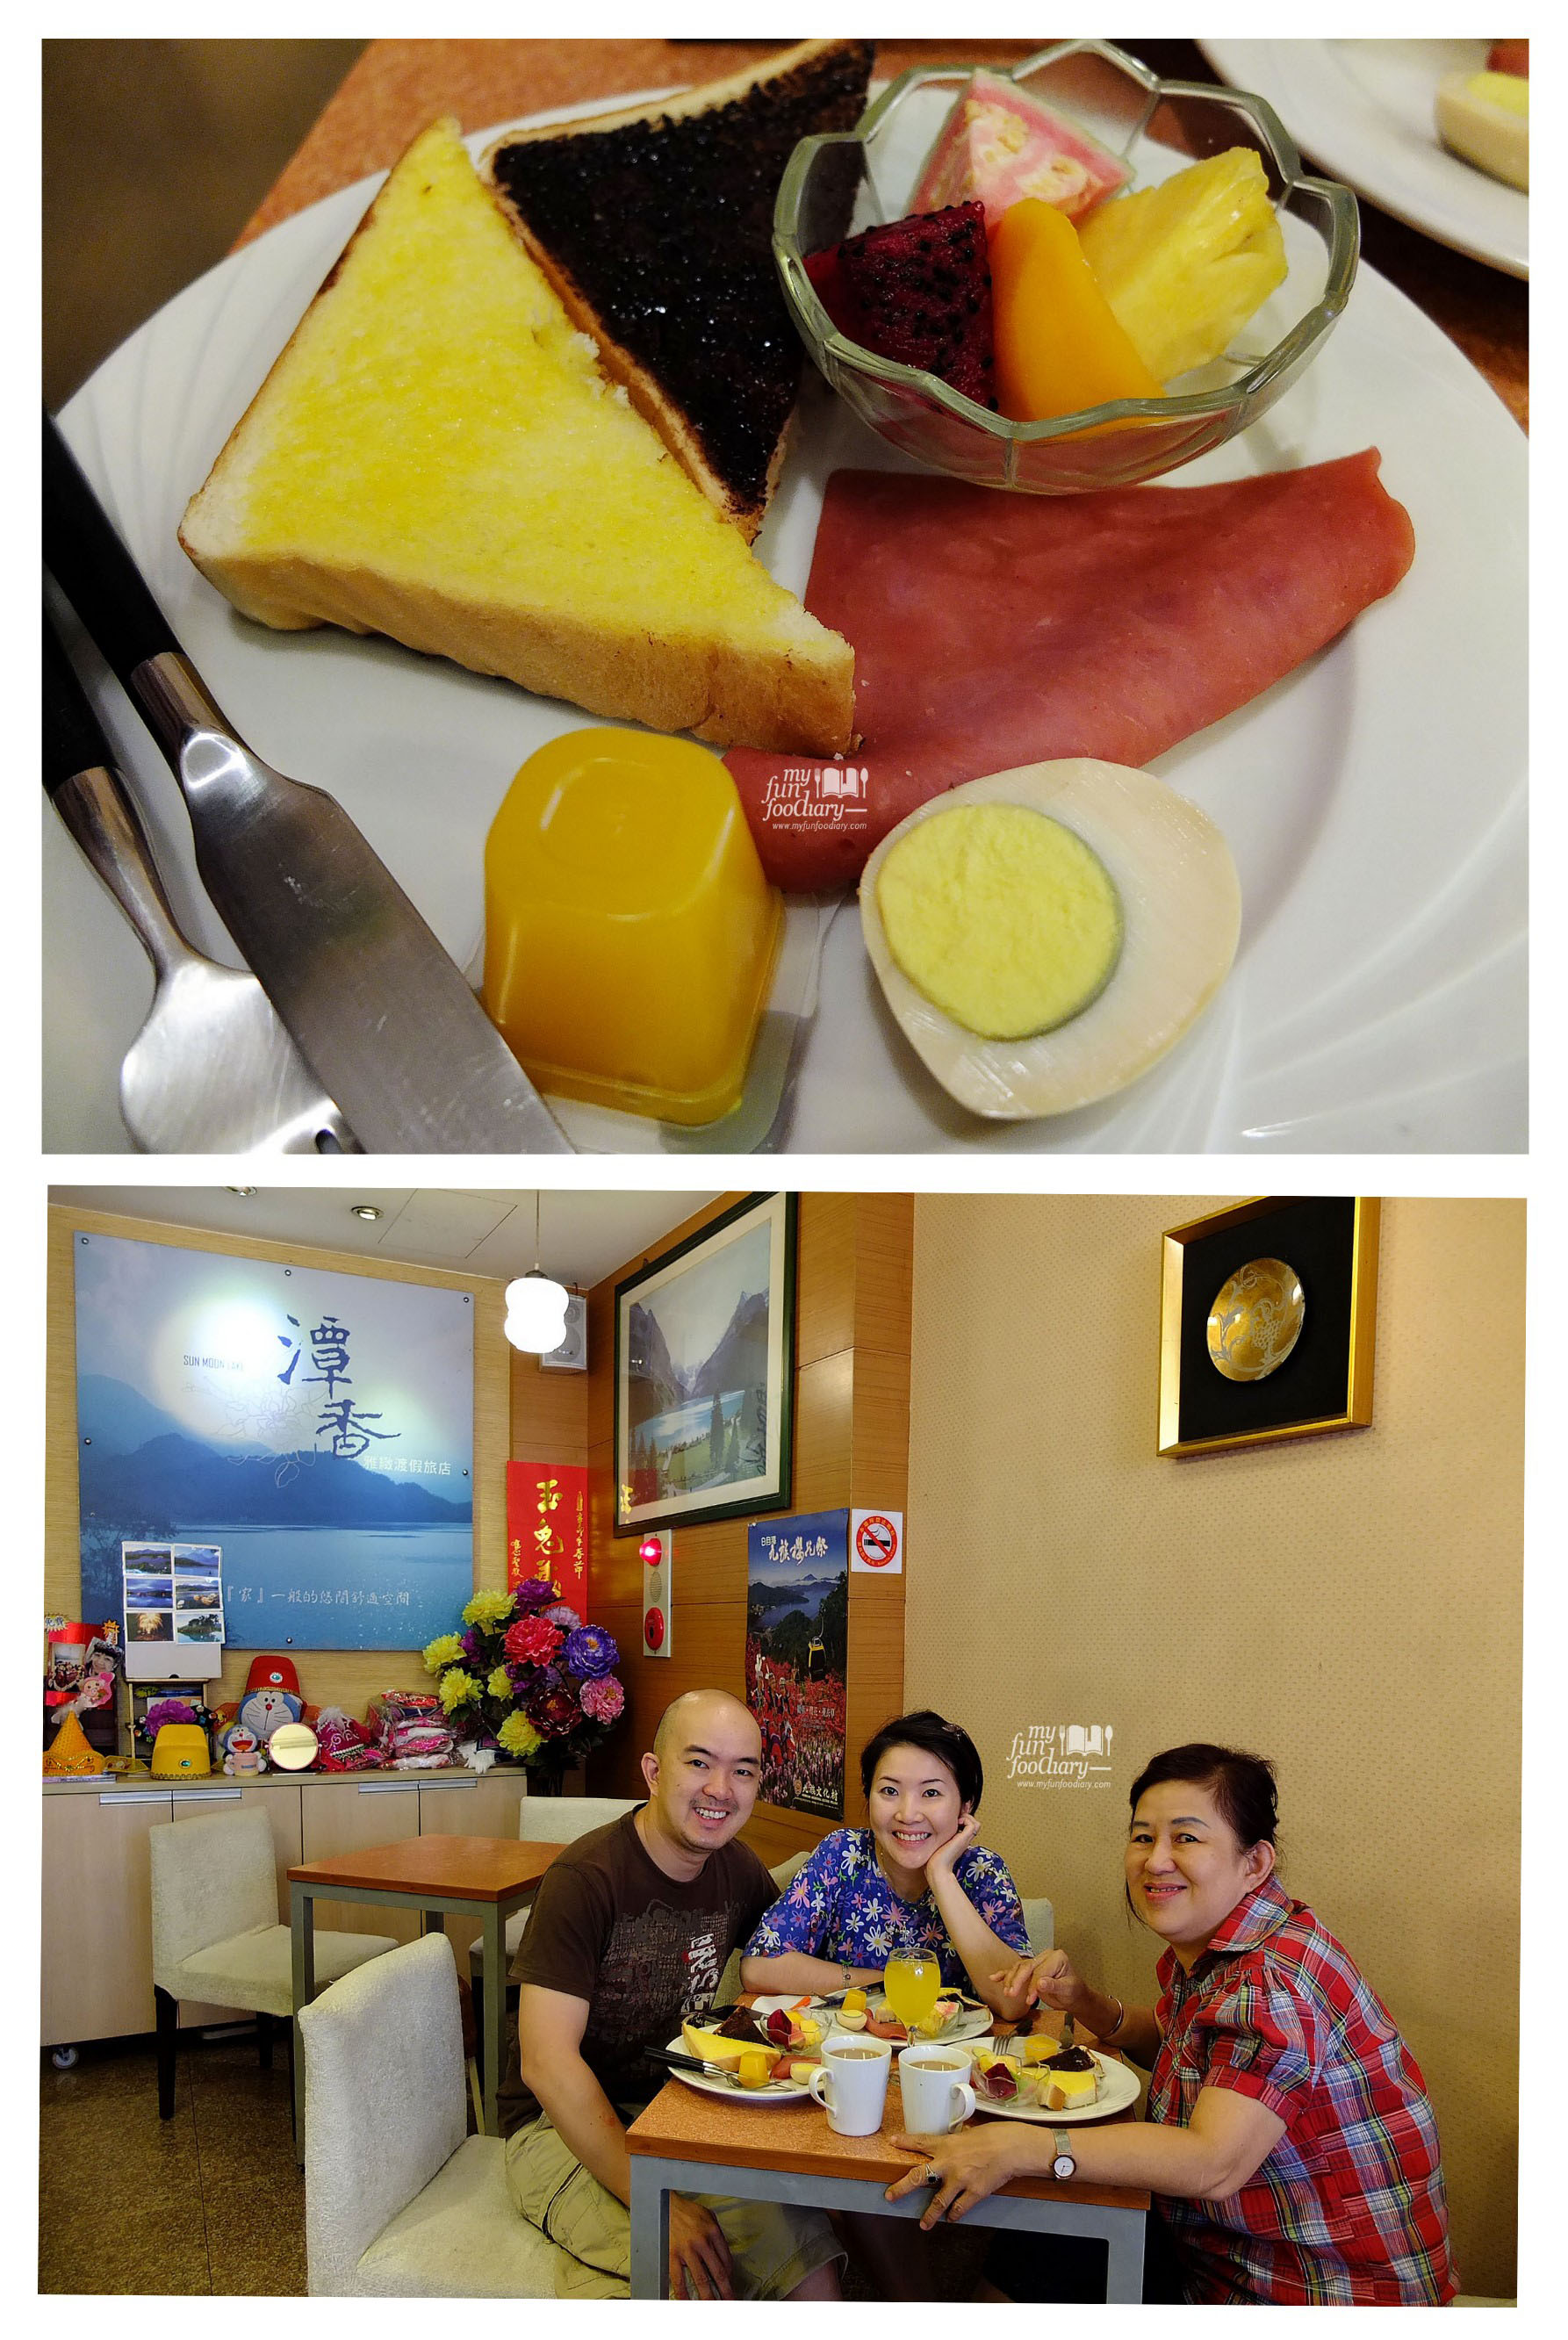 Breakfast at Tan Xiang Resort Sun Moon Lake - by Myfunfoodiary